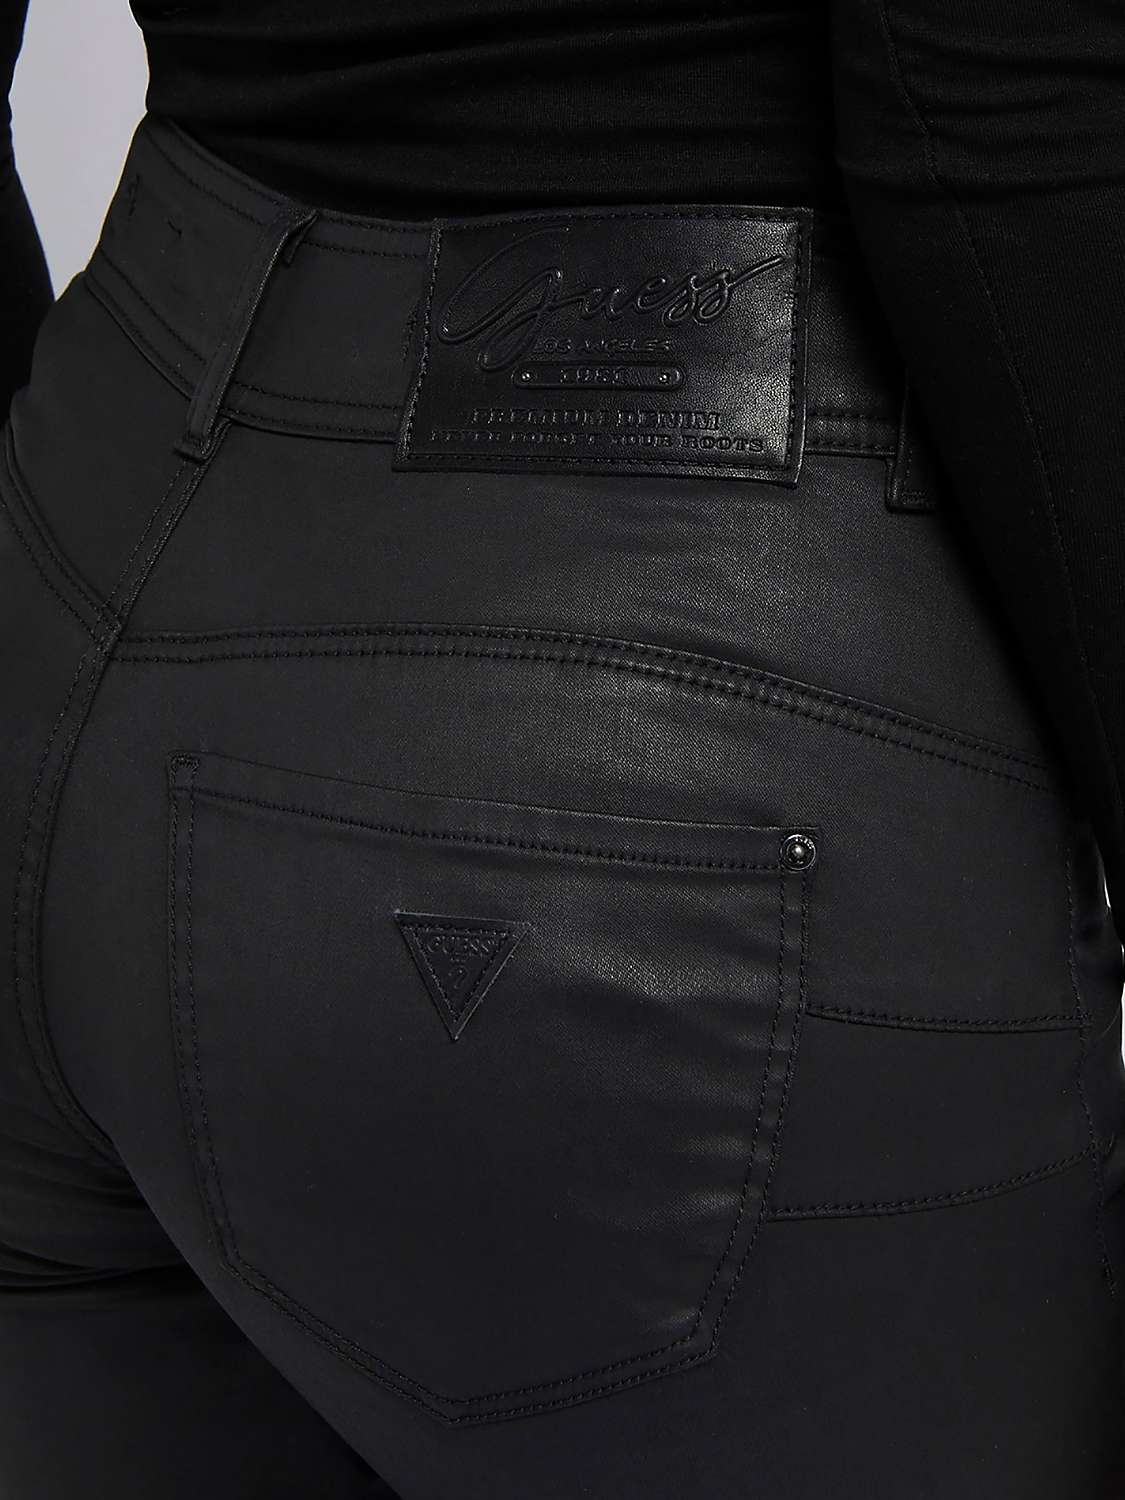 Buy GUESS Shape Up High-Rise Denim Jeans, Black Online at johnlewis.com